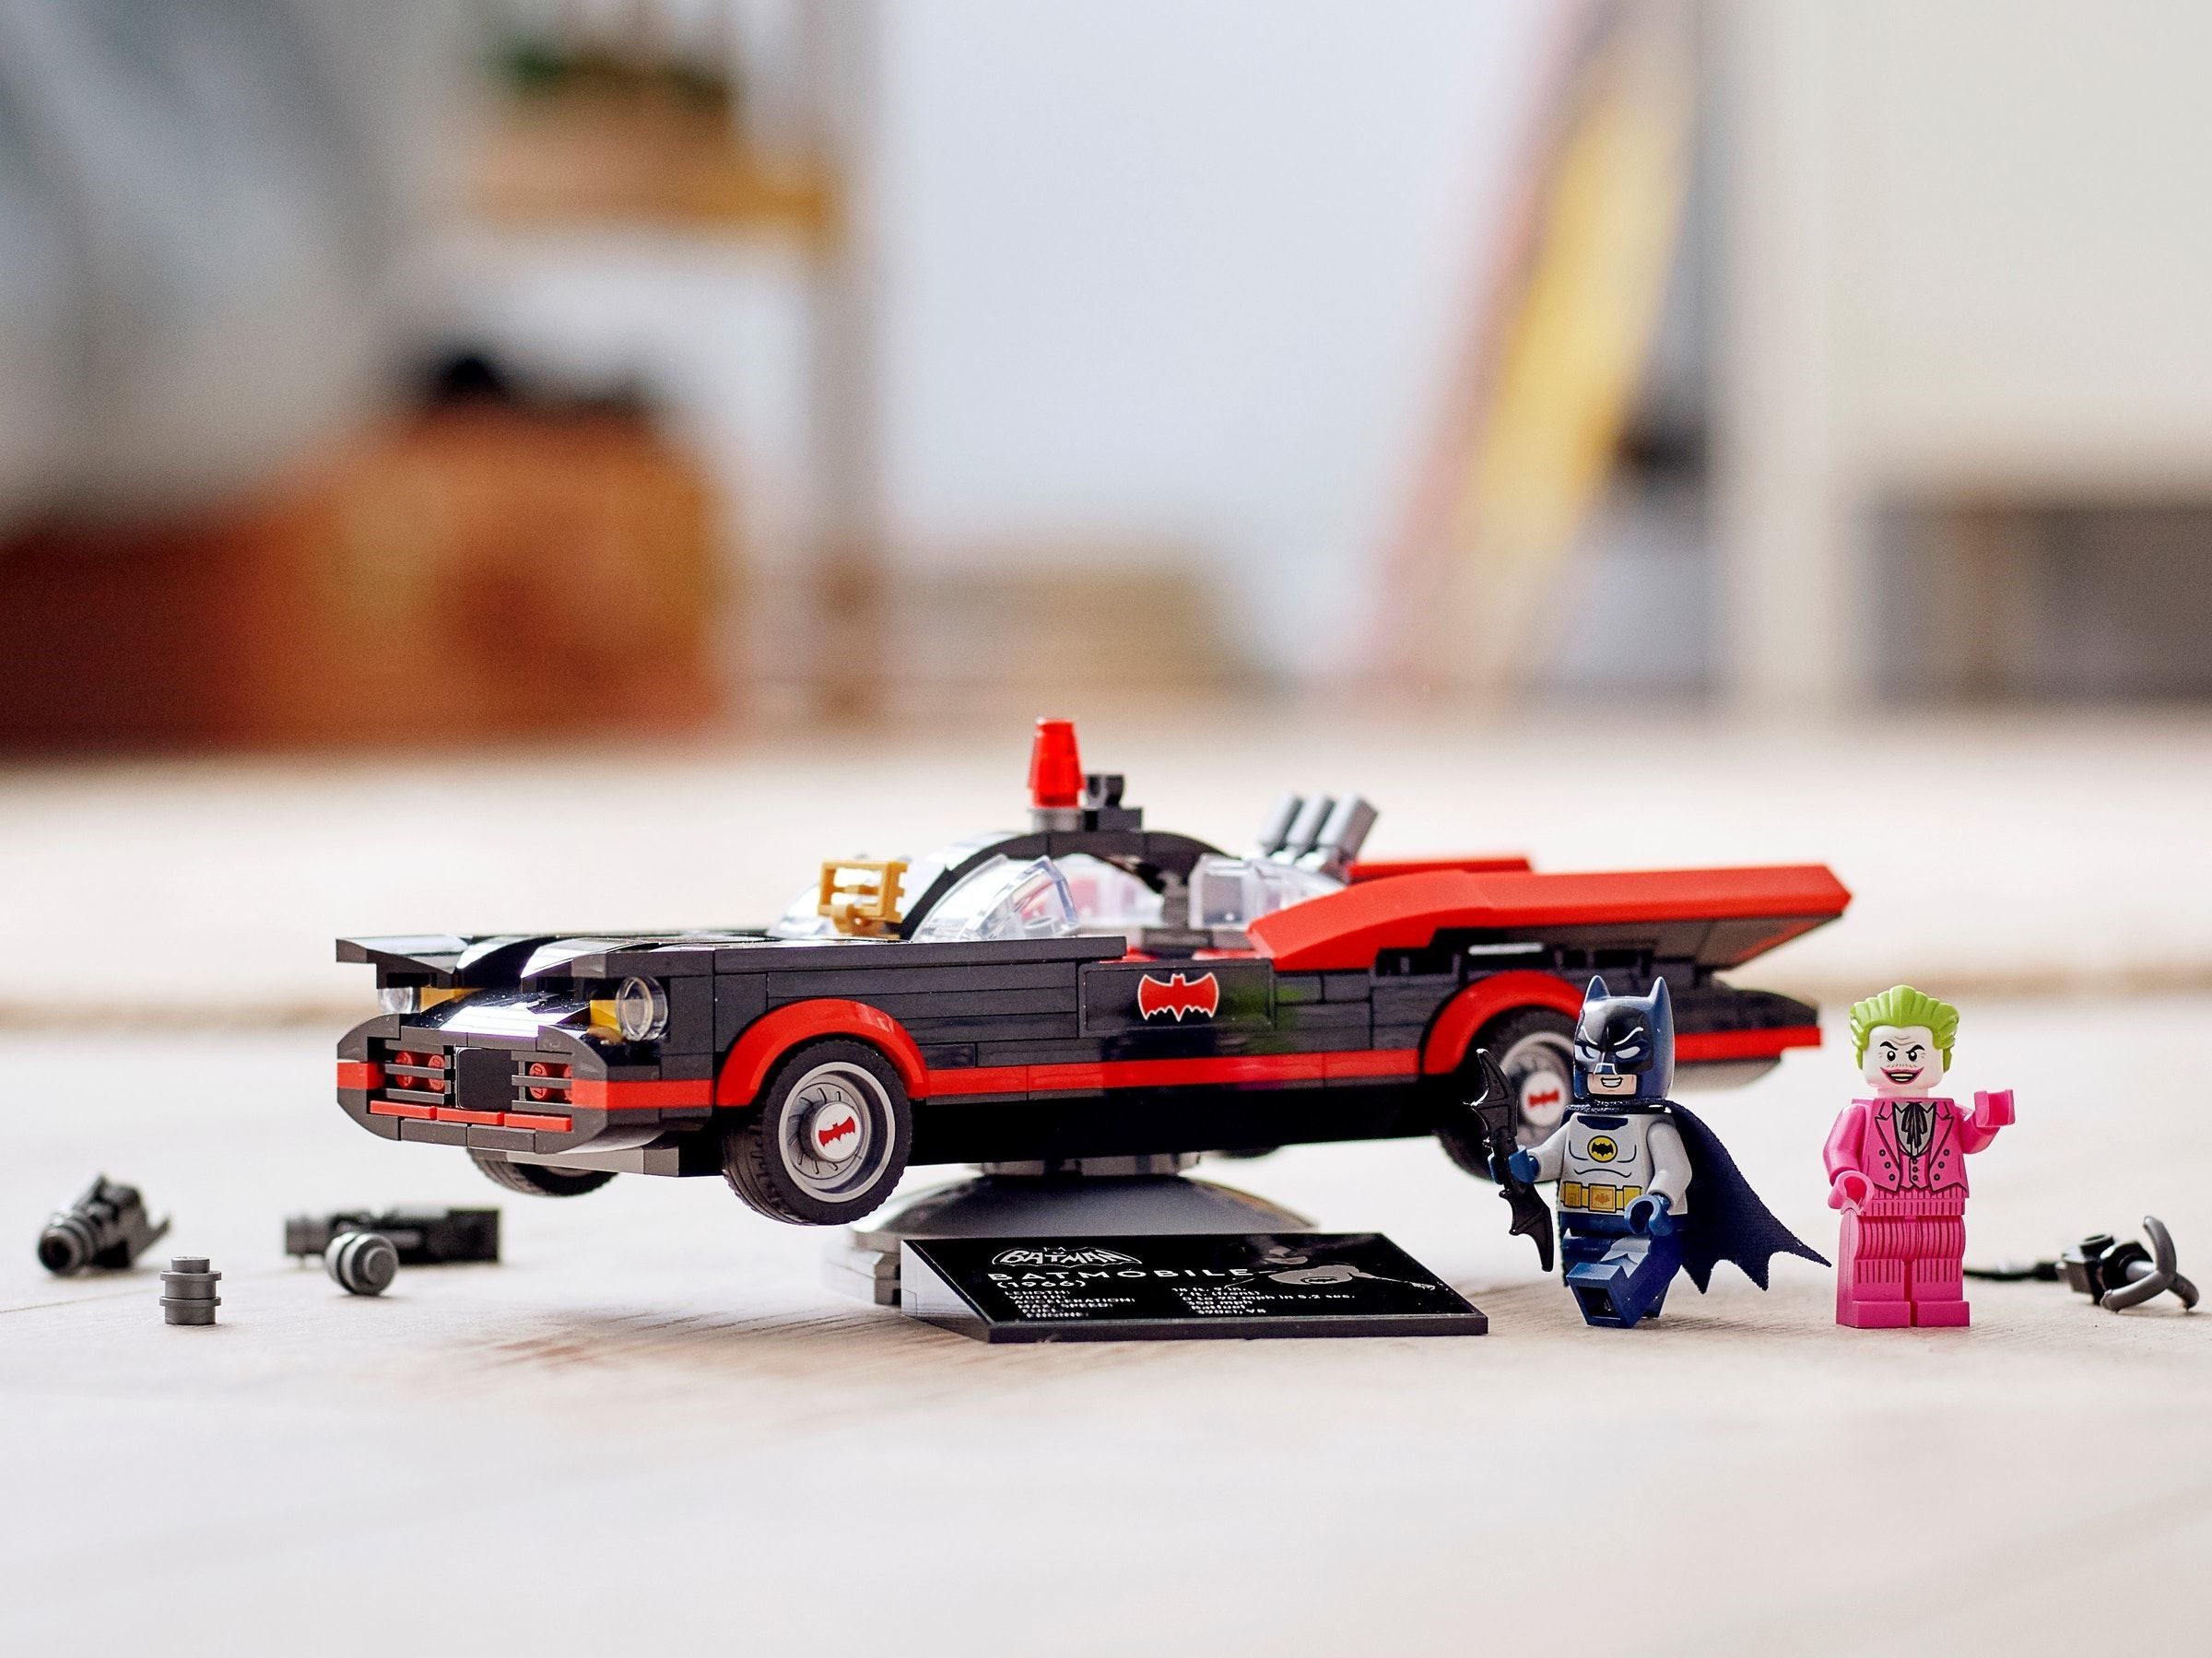 LEGO Batman Classic TV Series Batmobile set